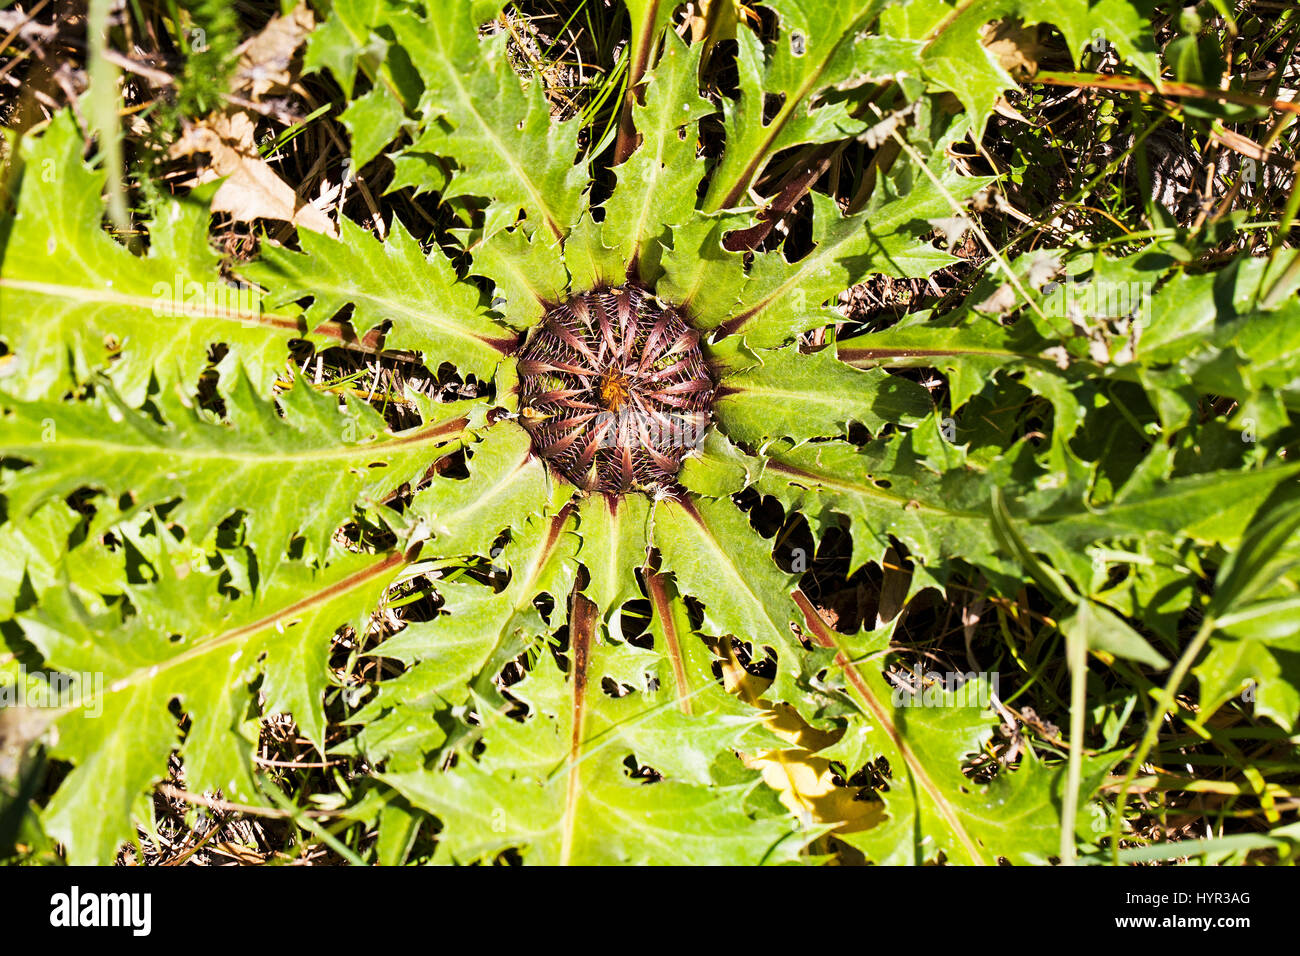 Acanthus leaved carline thistle Carlina acanthifolia subsp cynara Pyrenees National Park France July 2015 Stock Photo